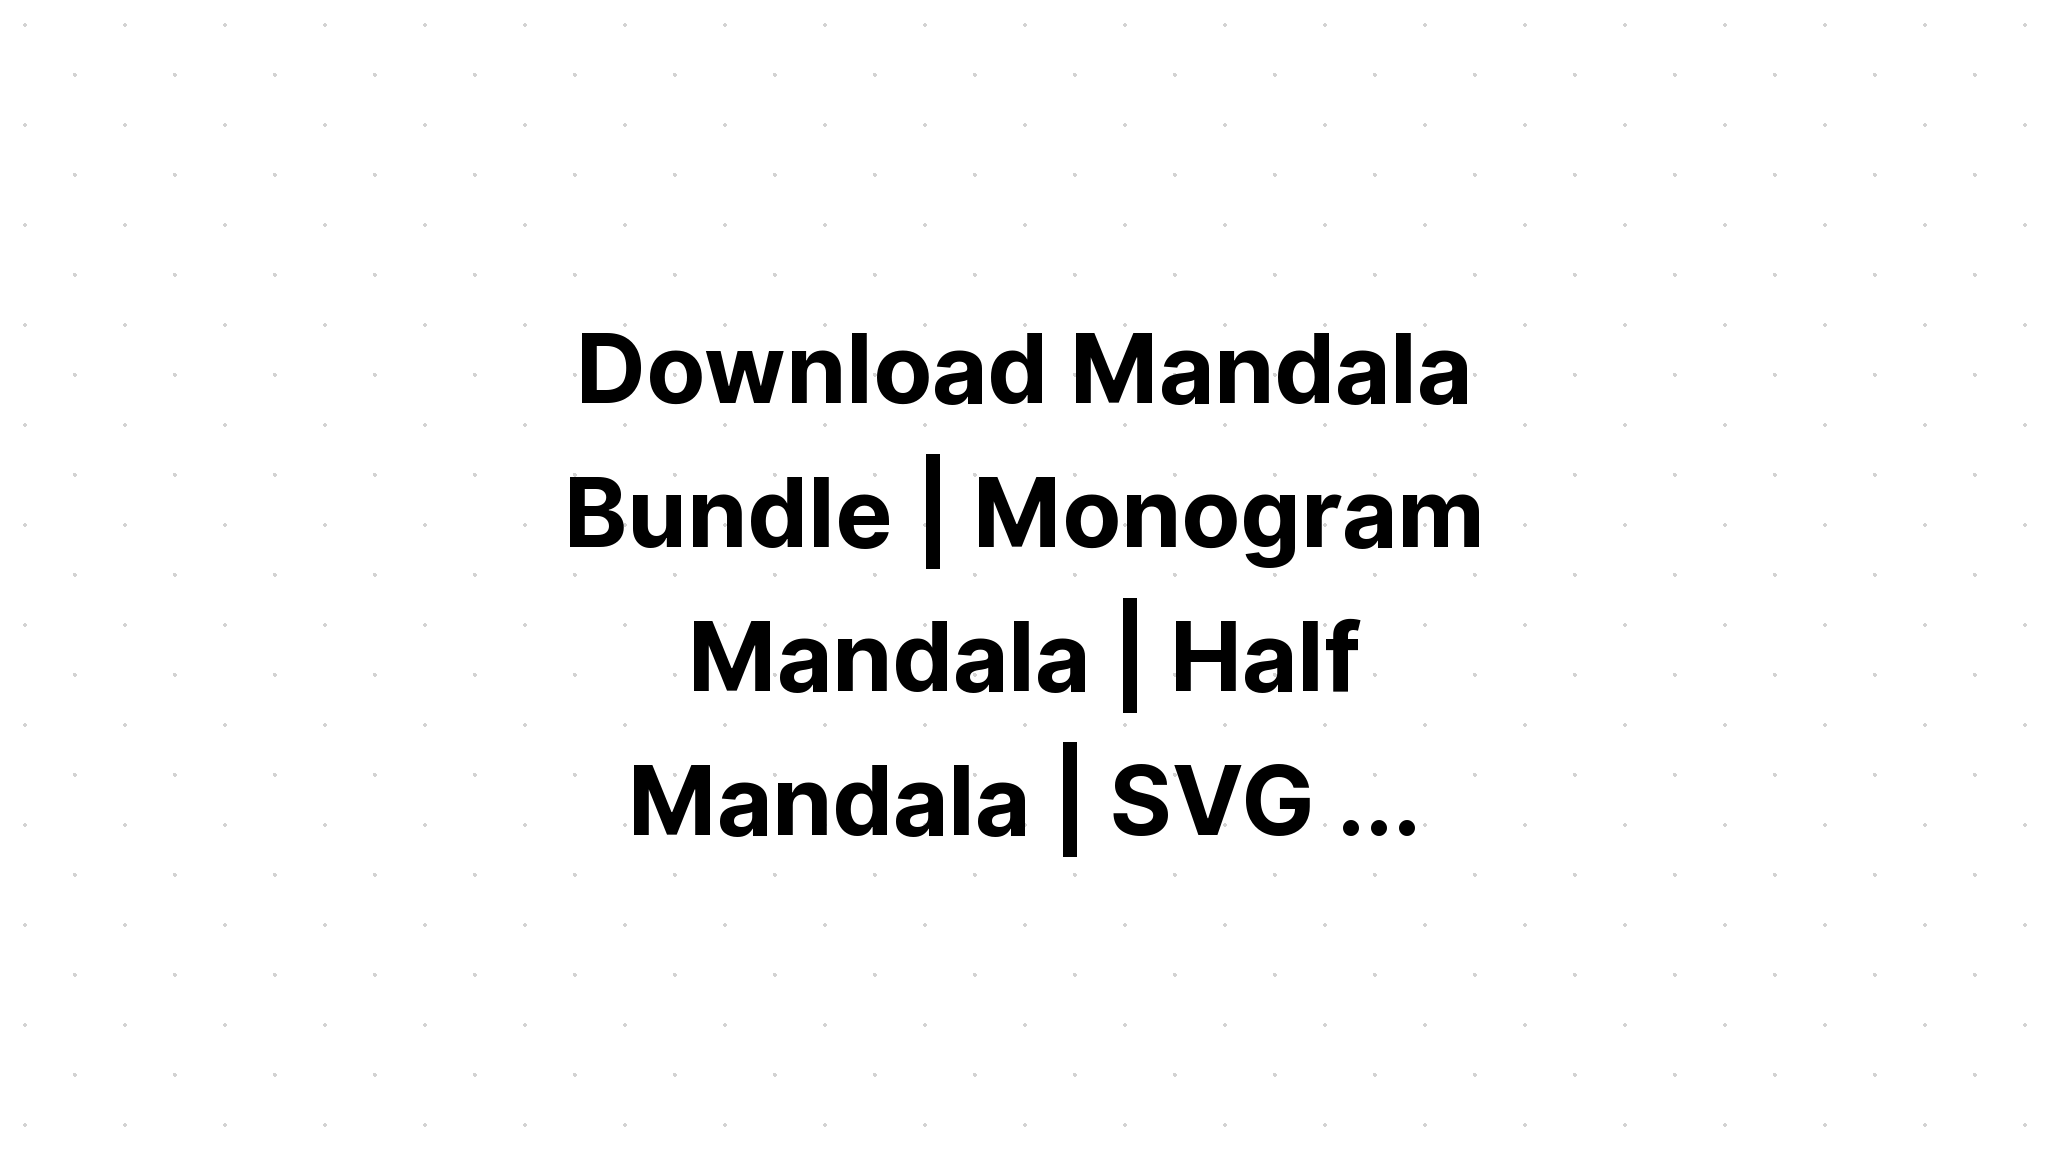 Download Mandala Monogram Svg Design - Layered SVG Cut File